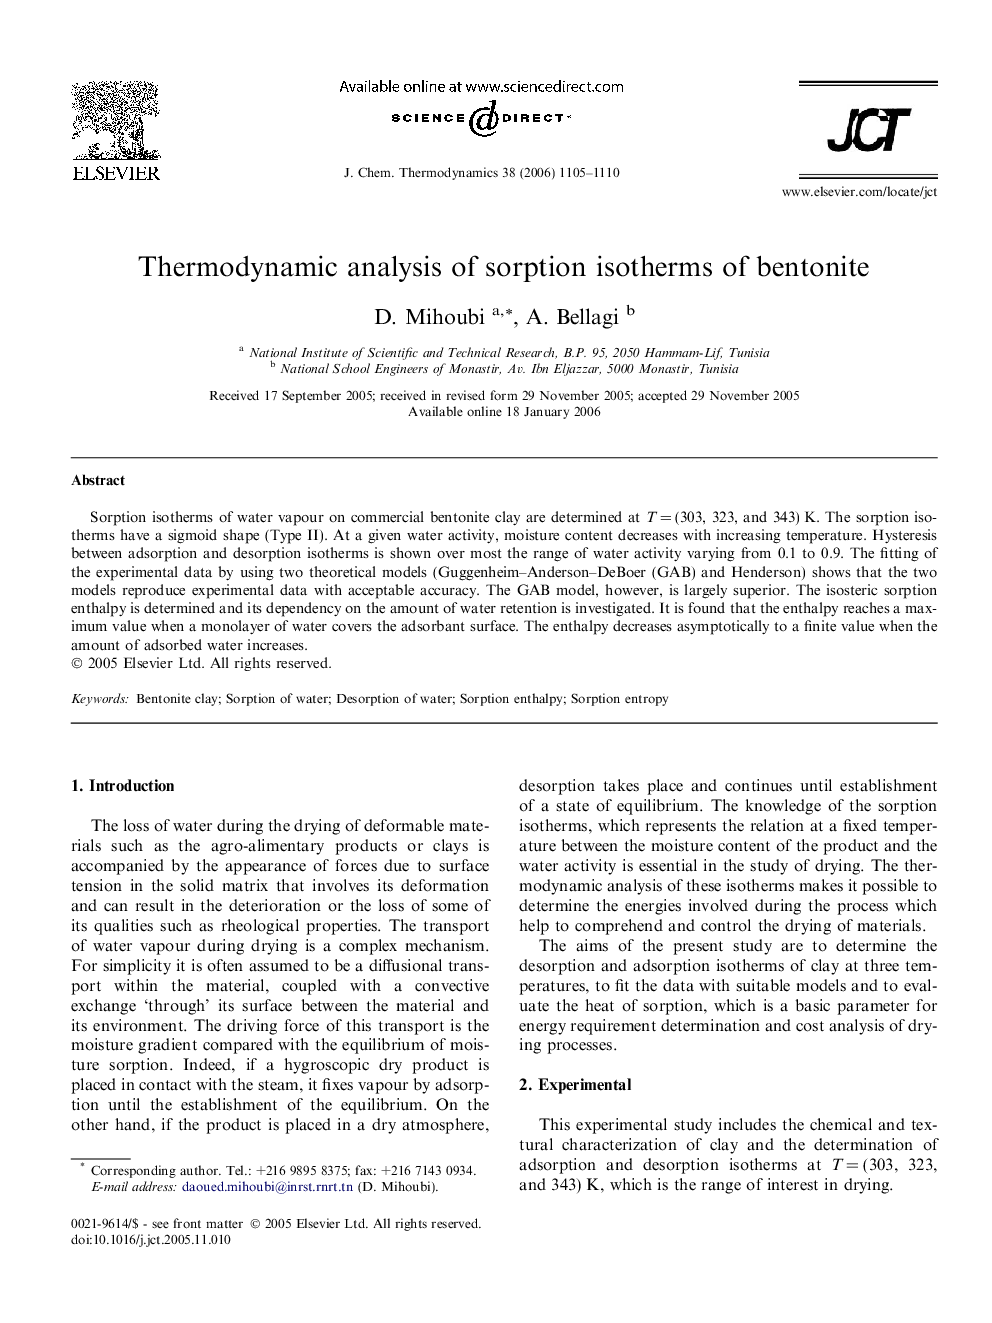 Thermodynamic analysis of sorption isotherms of bentonite